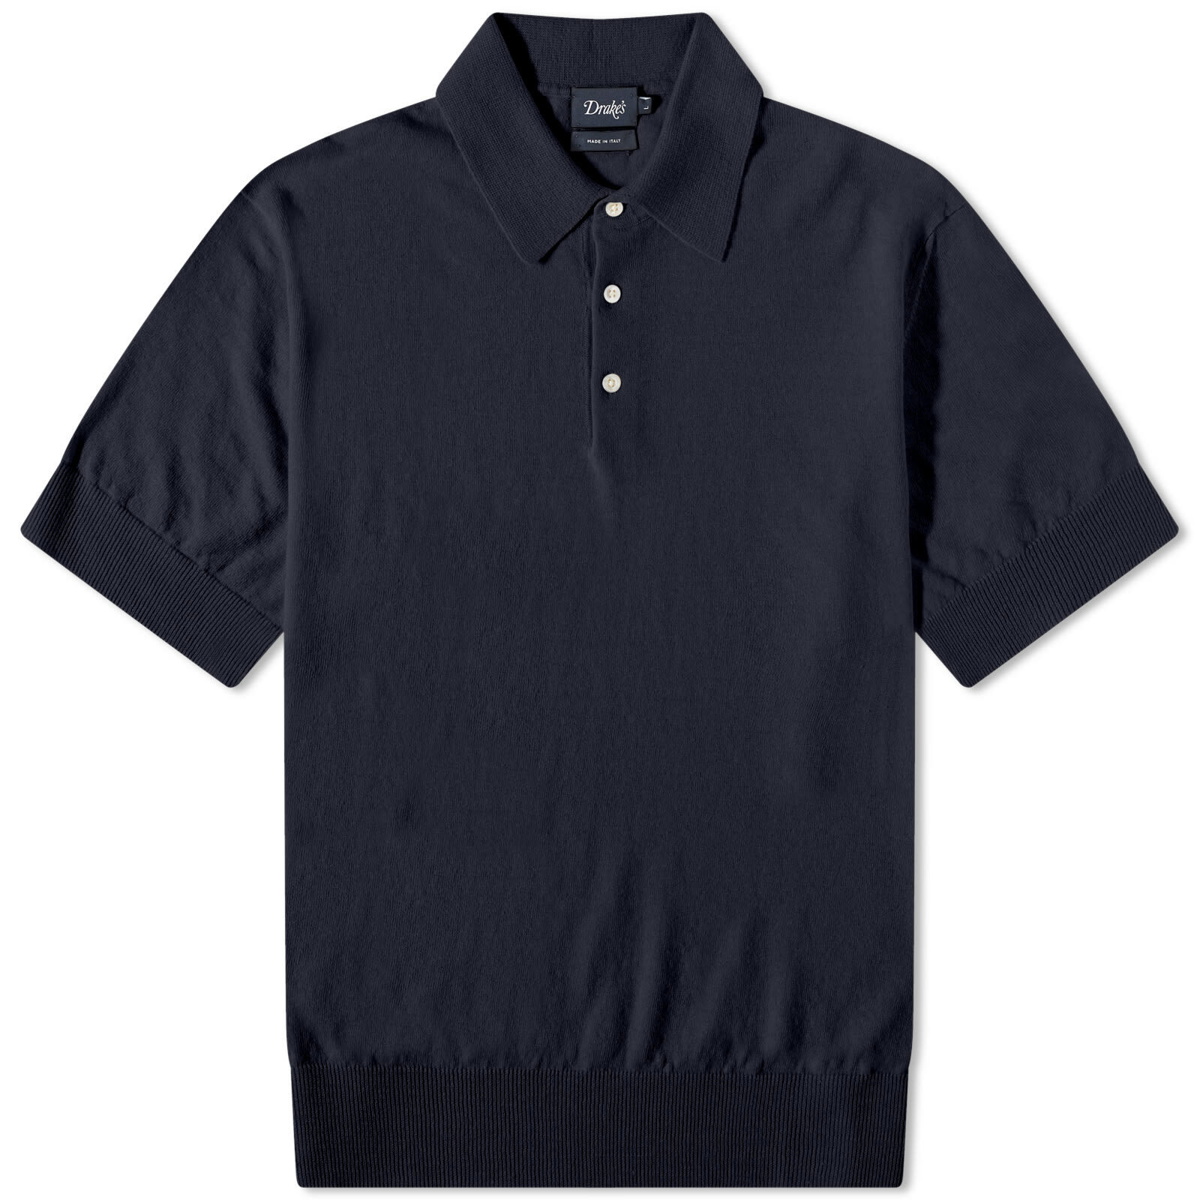 Drake's Men's Cotton-Linen Knitted Polo Shirt in Navy Drake's